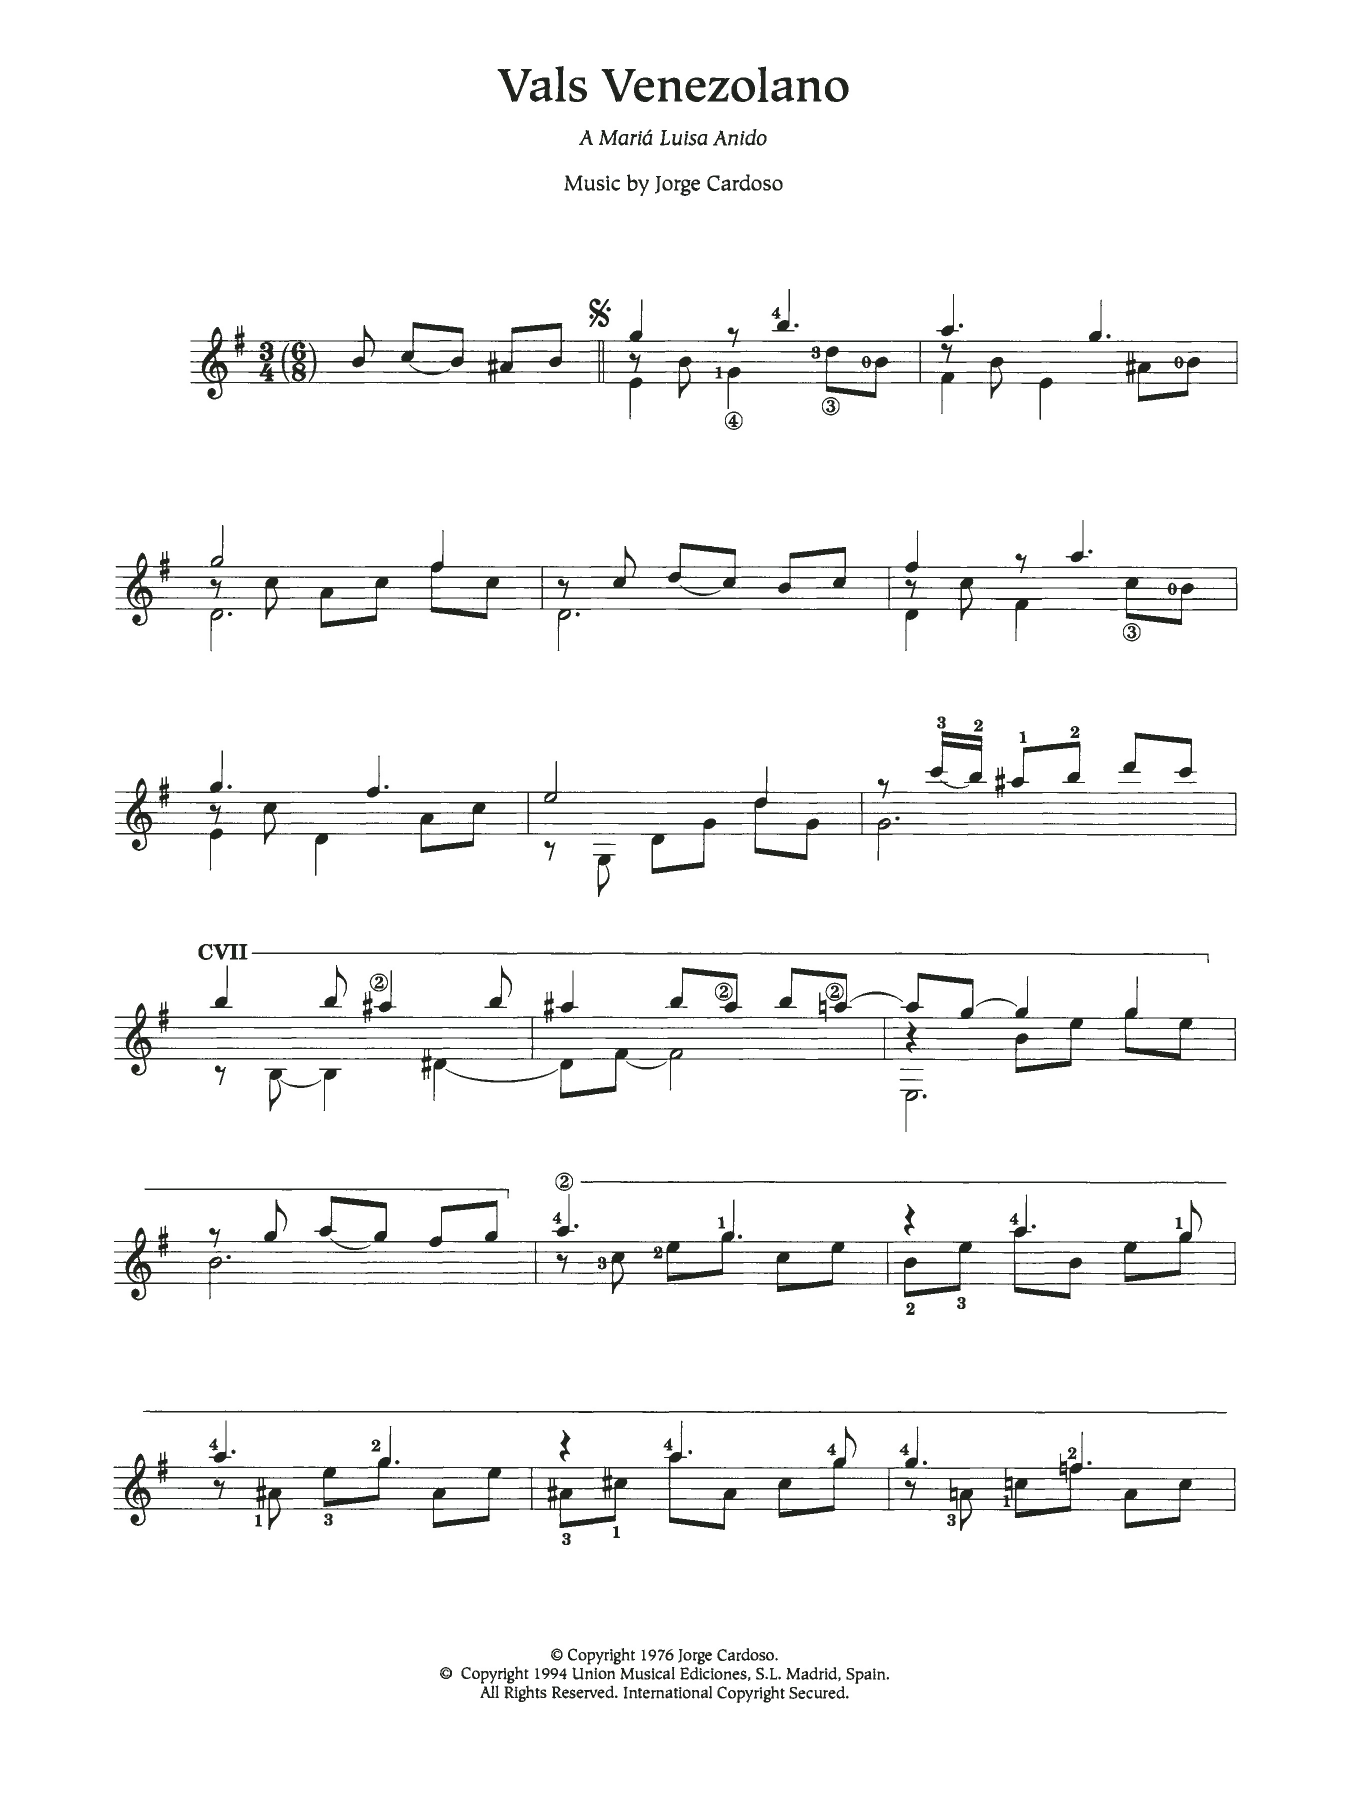 Jorge Cardoso Vals Venezolando Sheet Music Notes & Chords for Guitar - Download or Print PDF